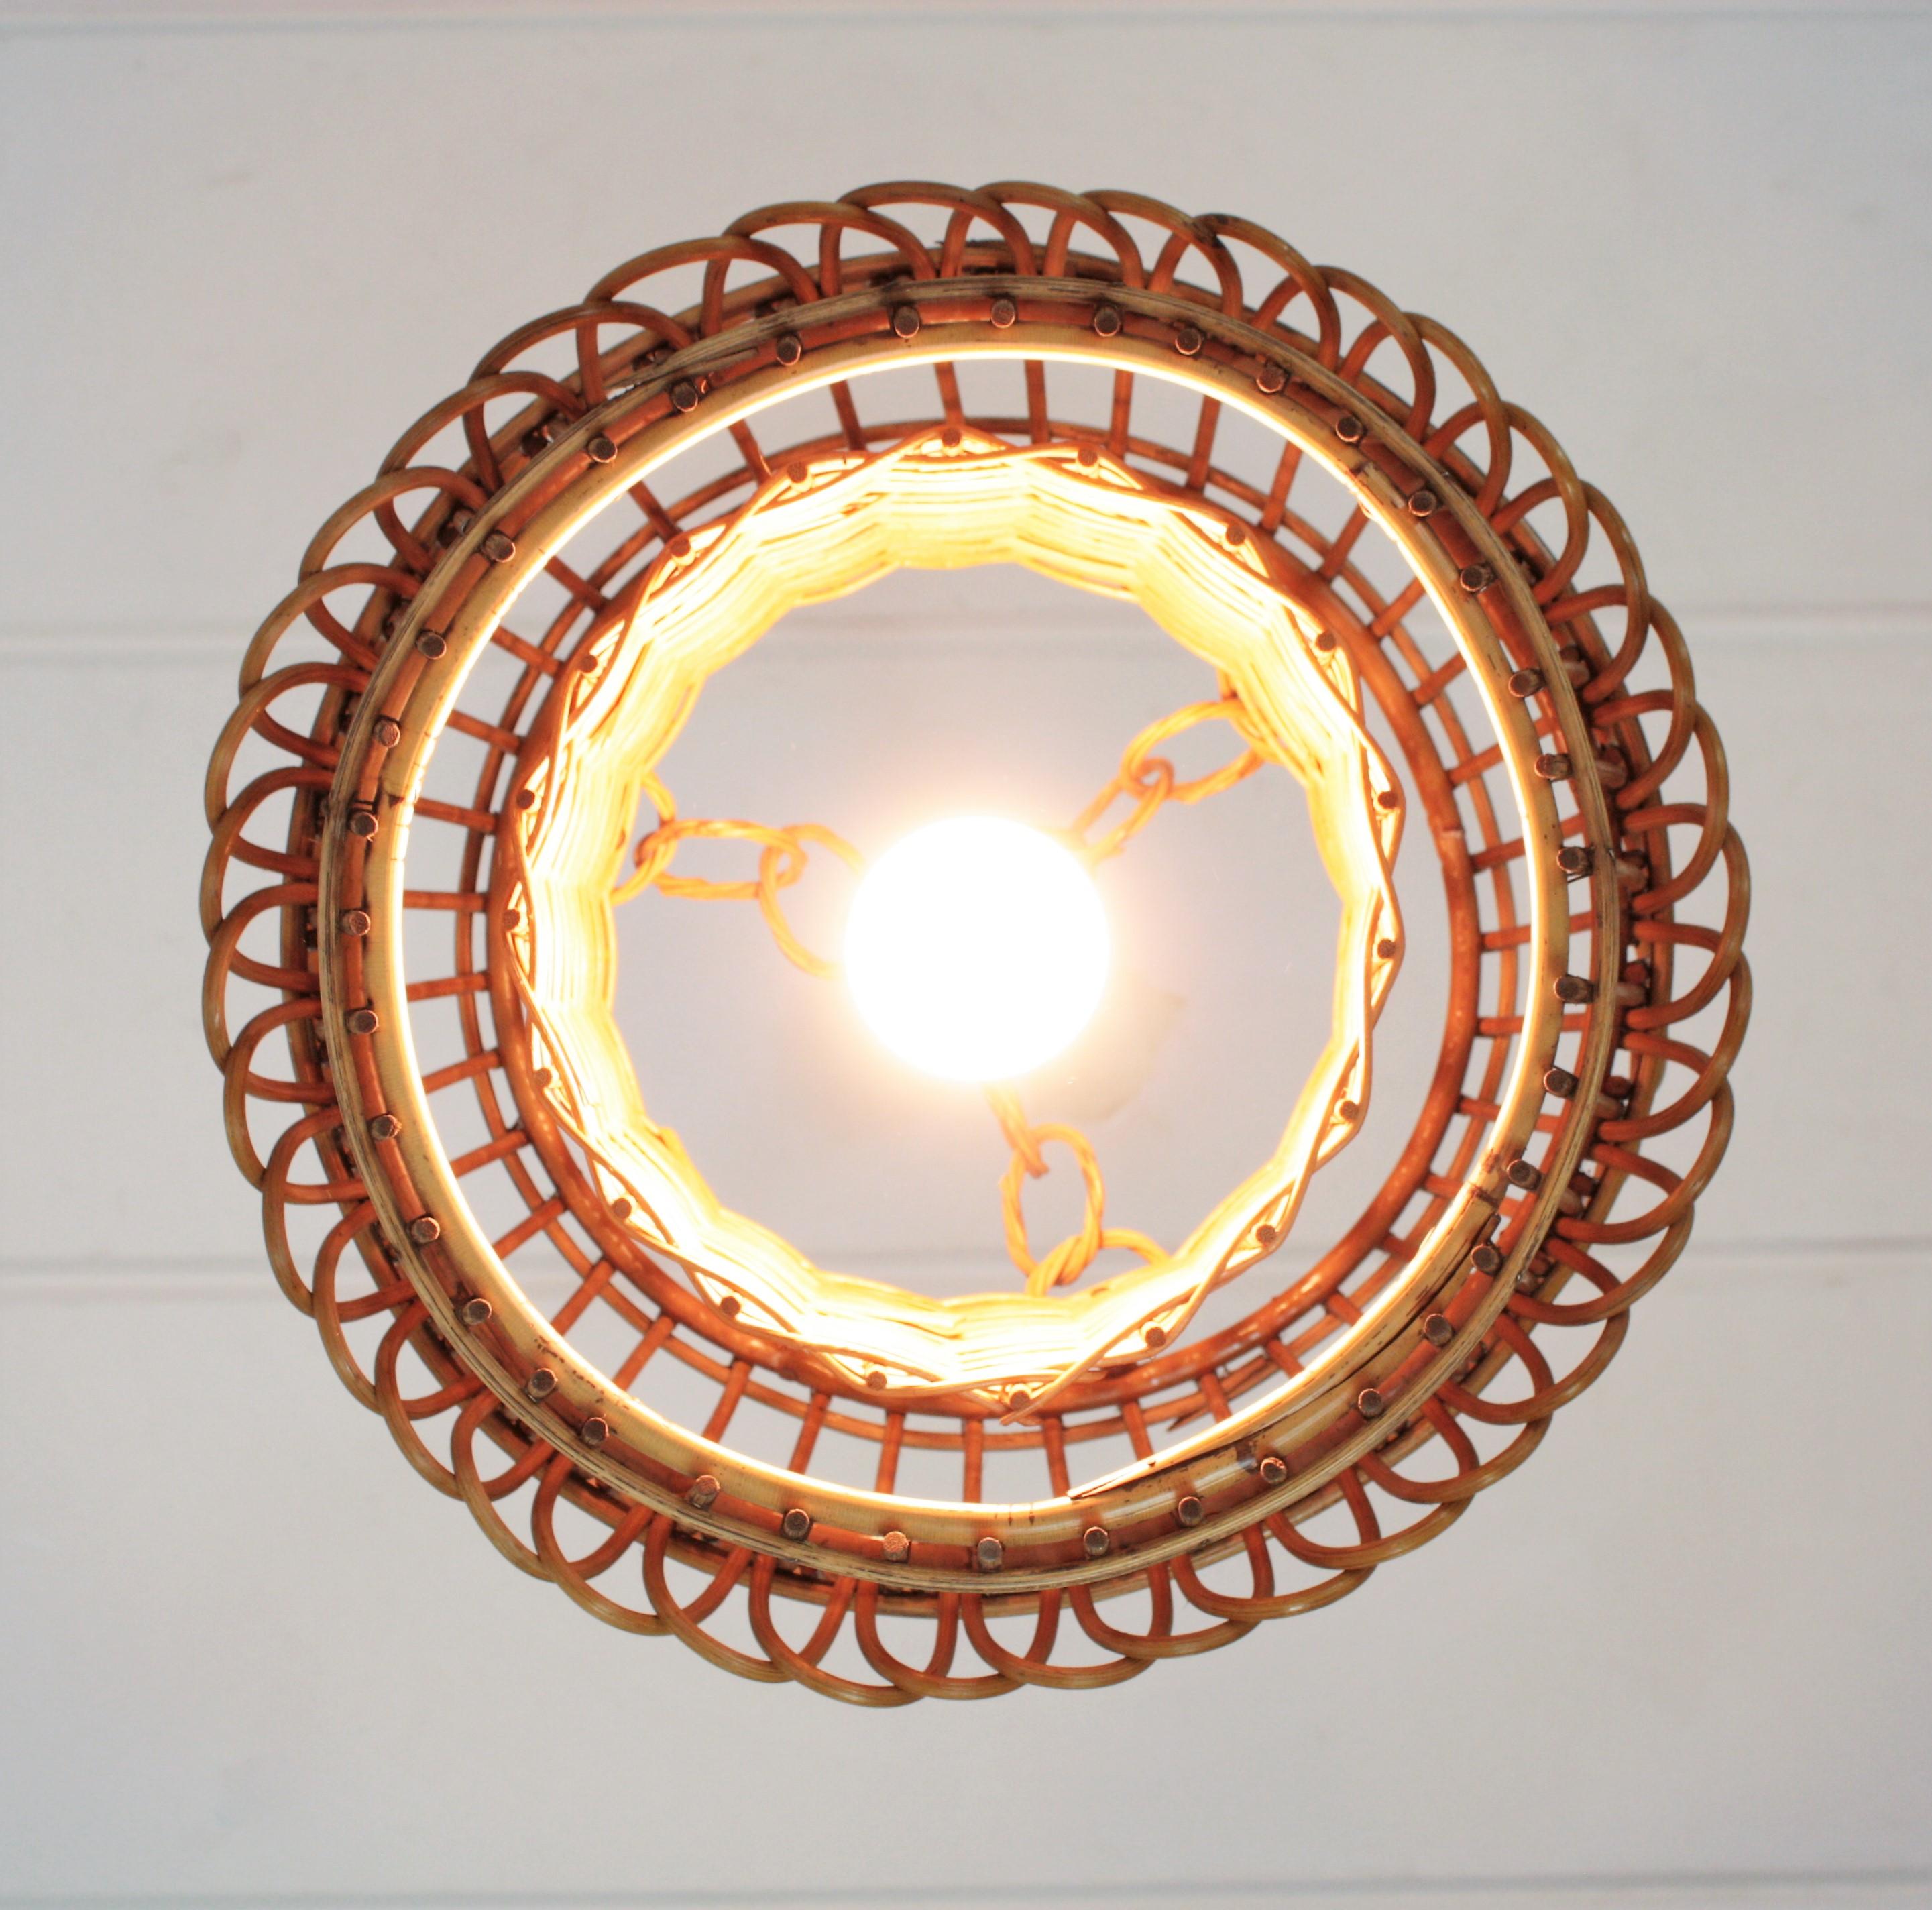 Spanish Modernist Rattan Pendant Lamp / Hanging Light with Woven Wicker Shade 4